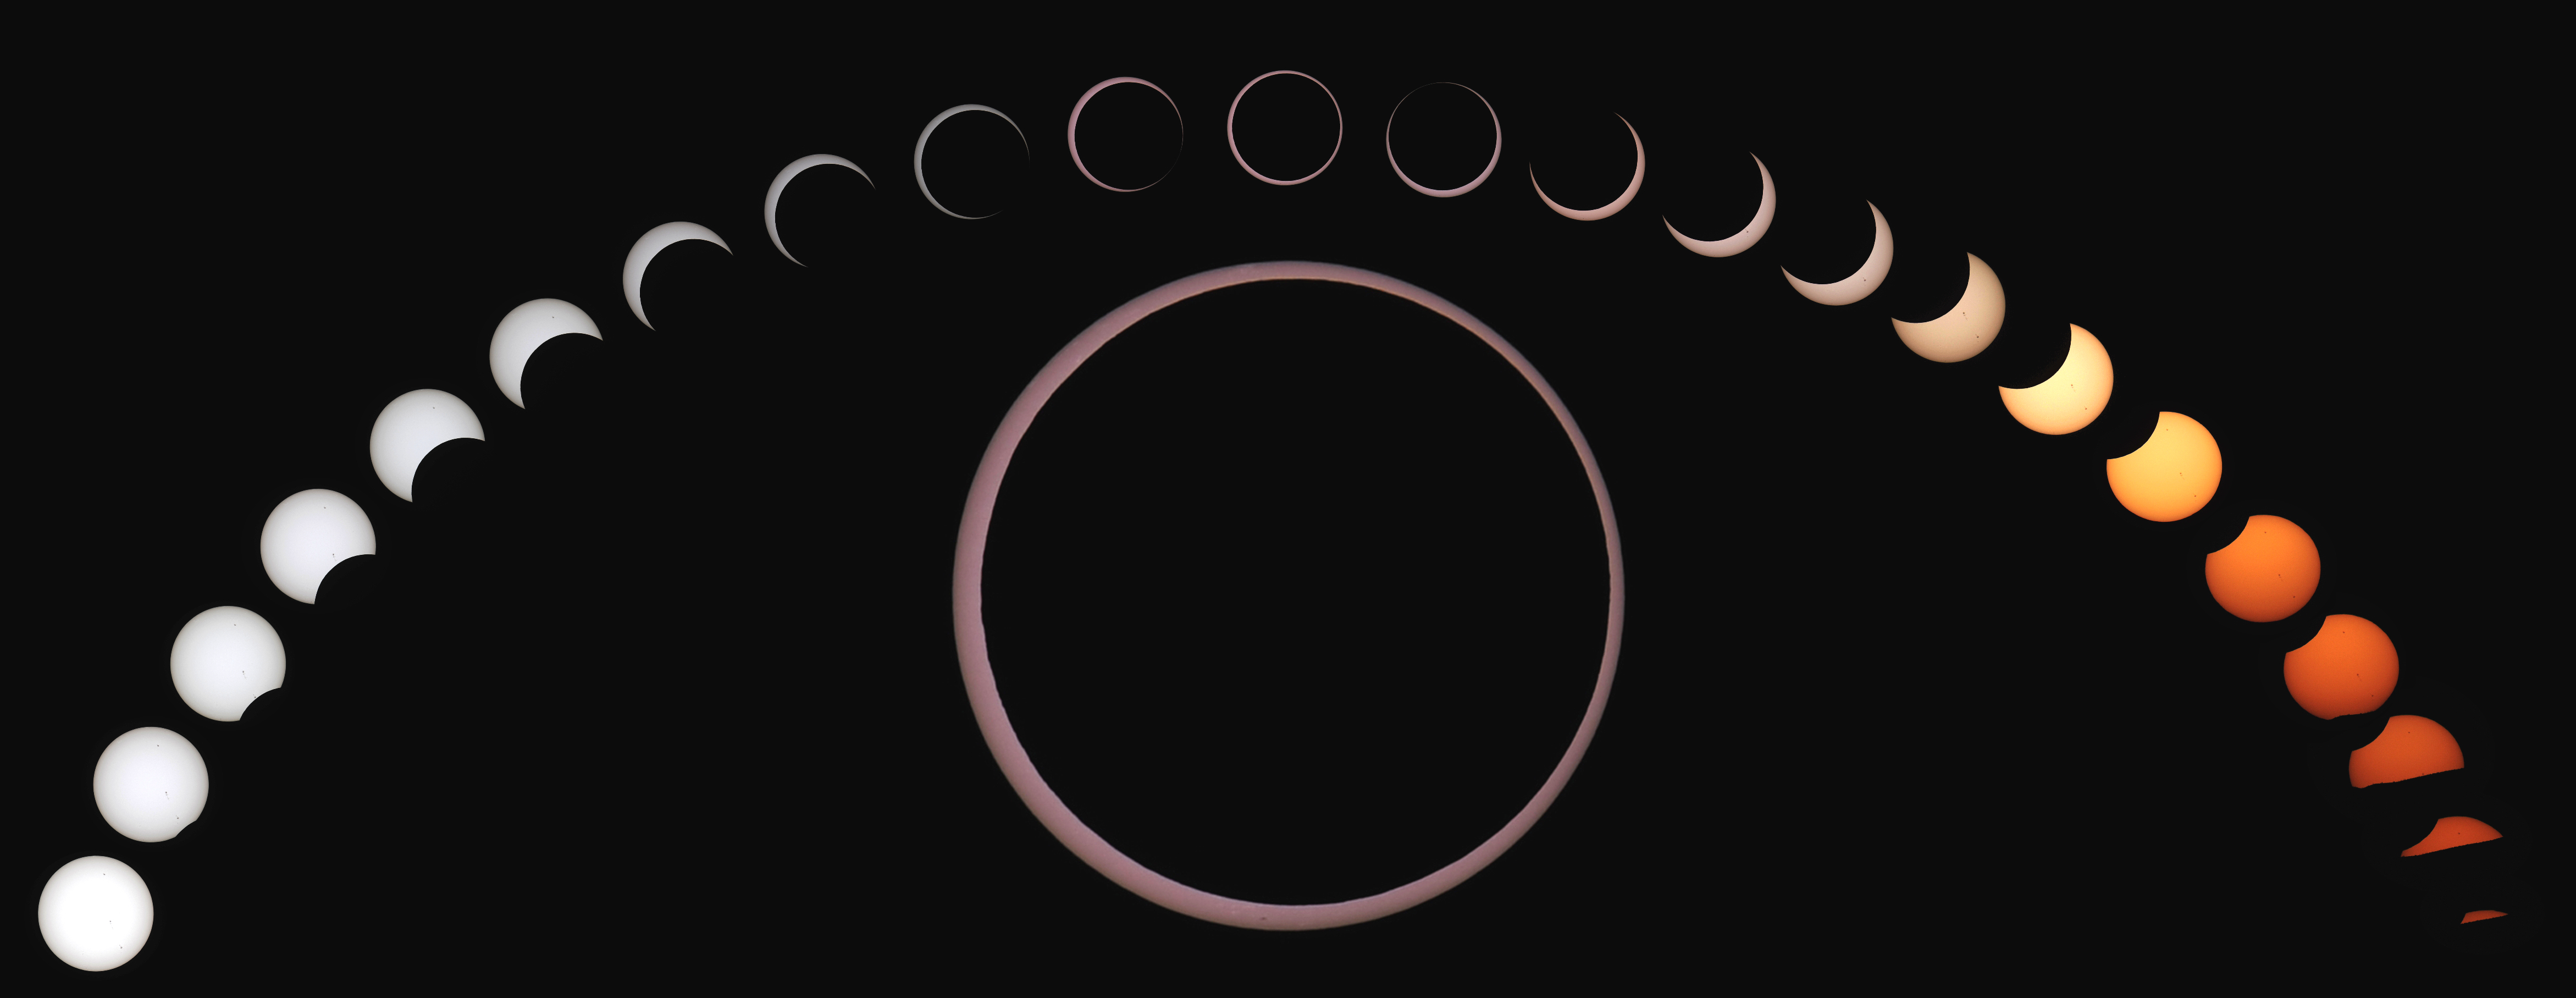 Annular Eclipse of 2012